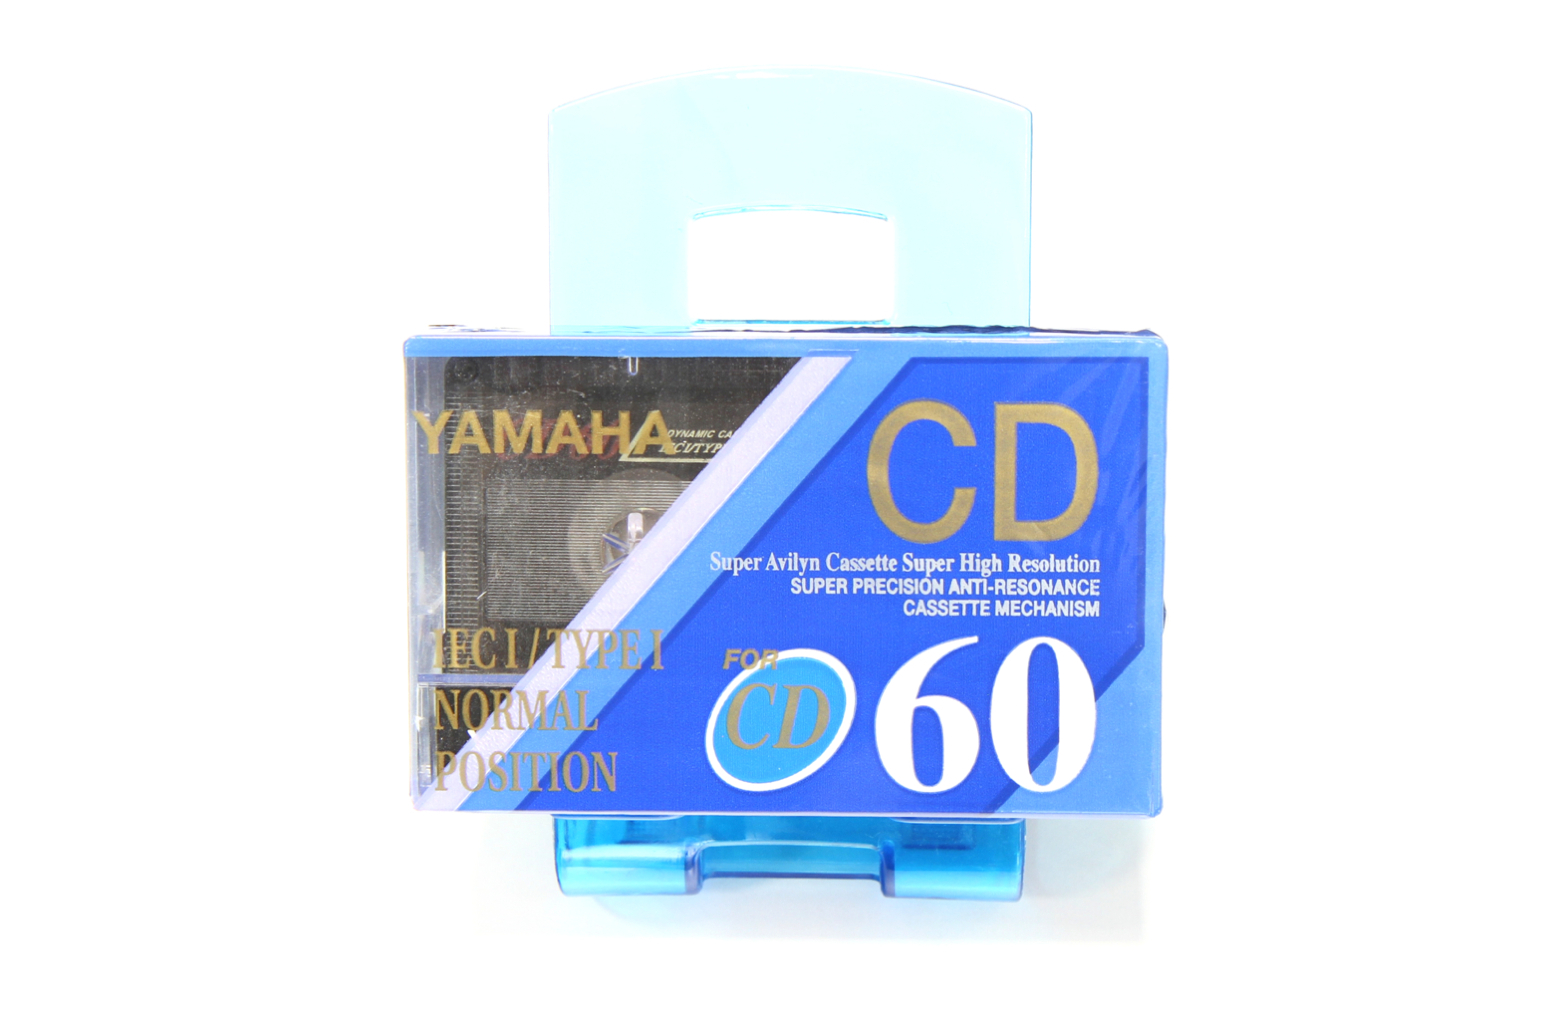 YAMAHA CD-60 Position Normal